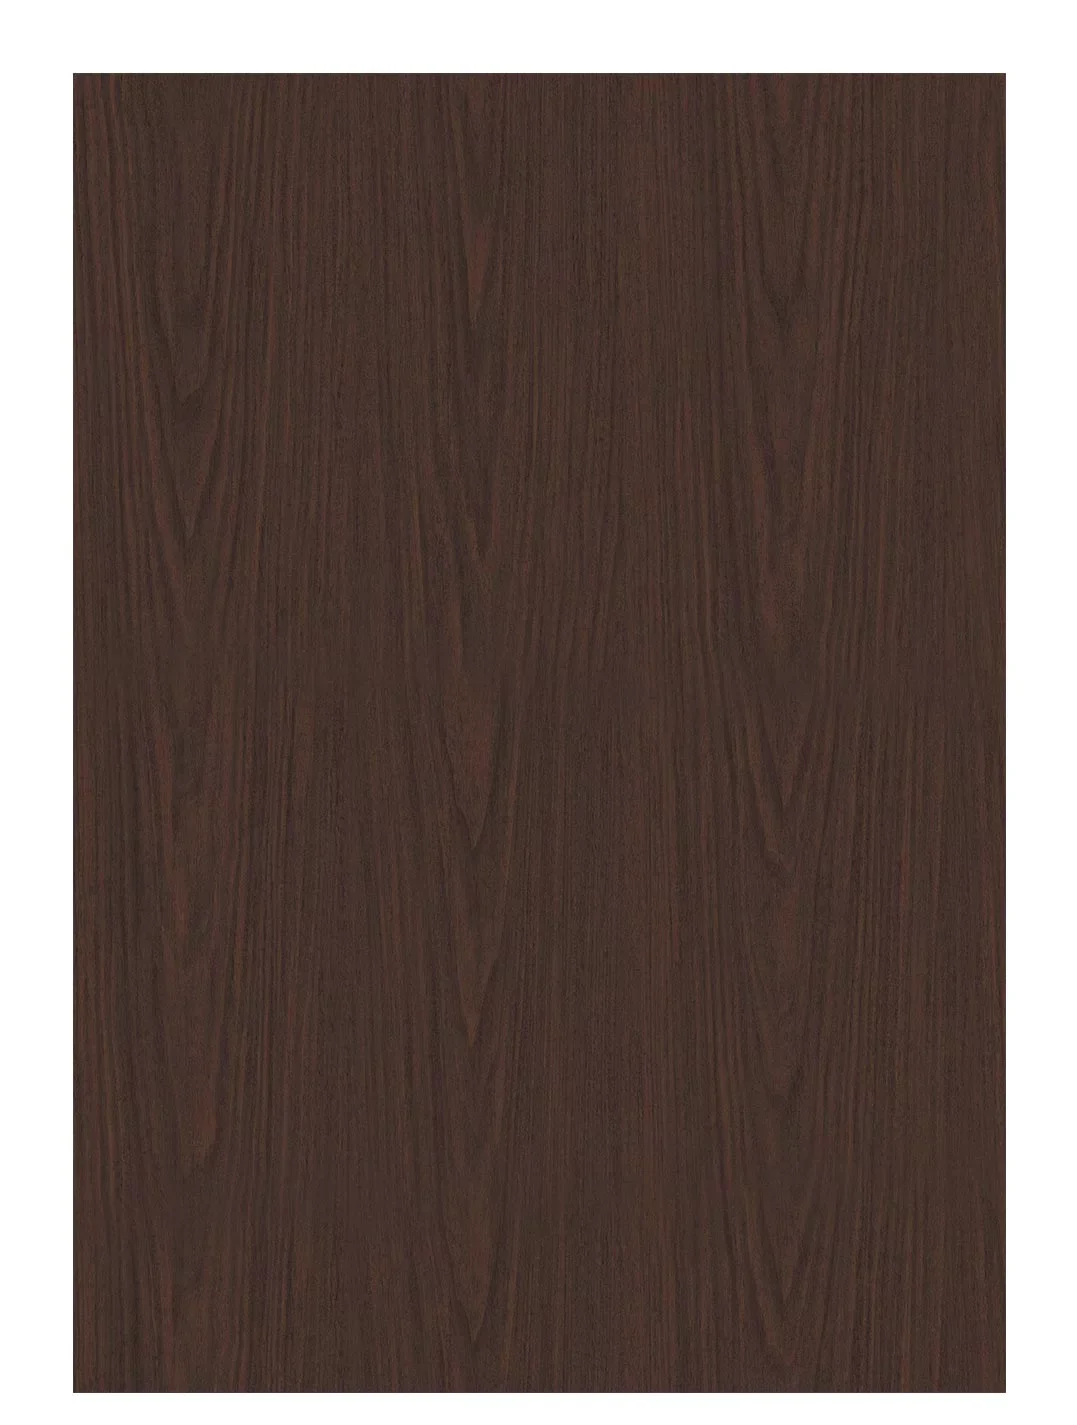 Alutech - Natural Wood | NW-206 - OVANGKOL